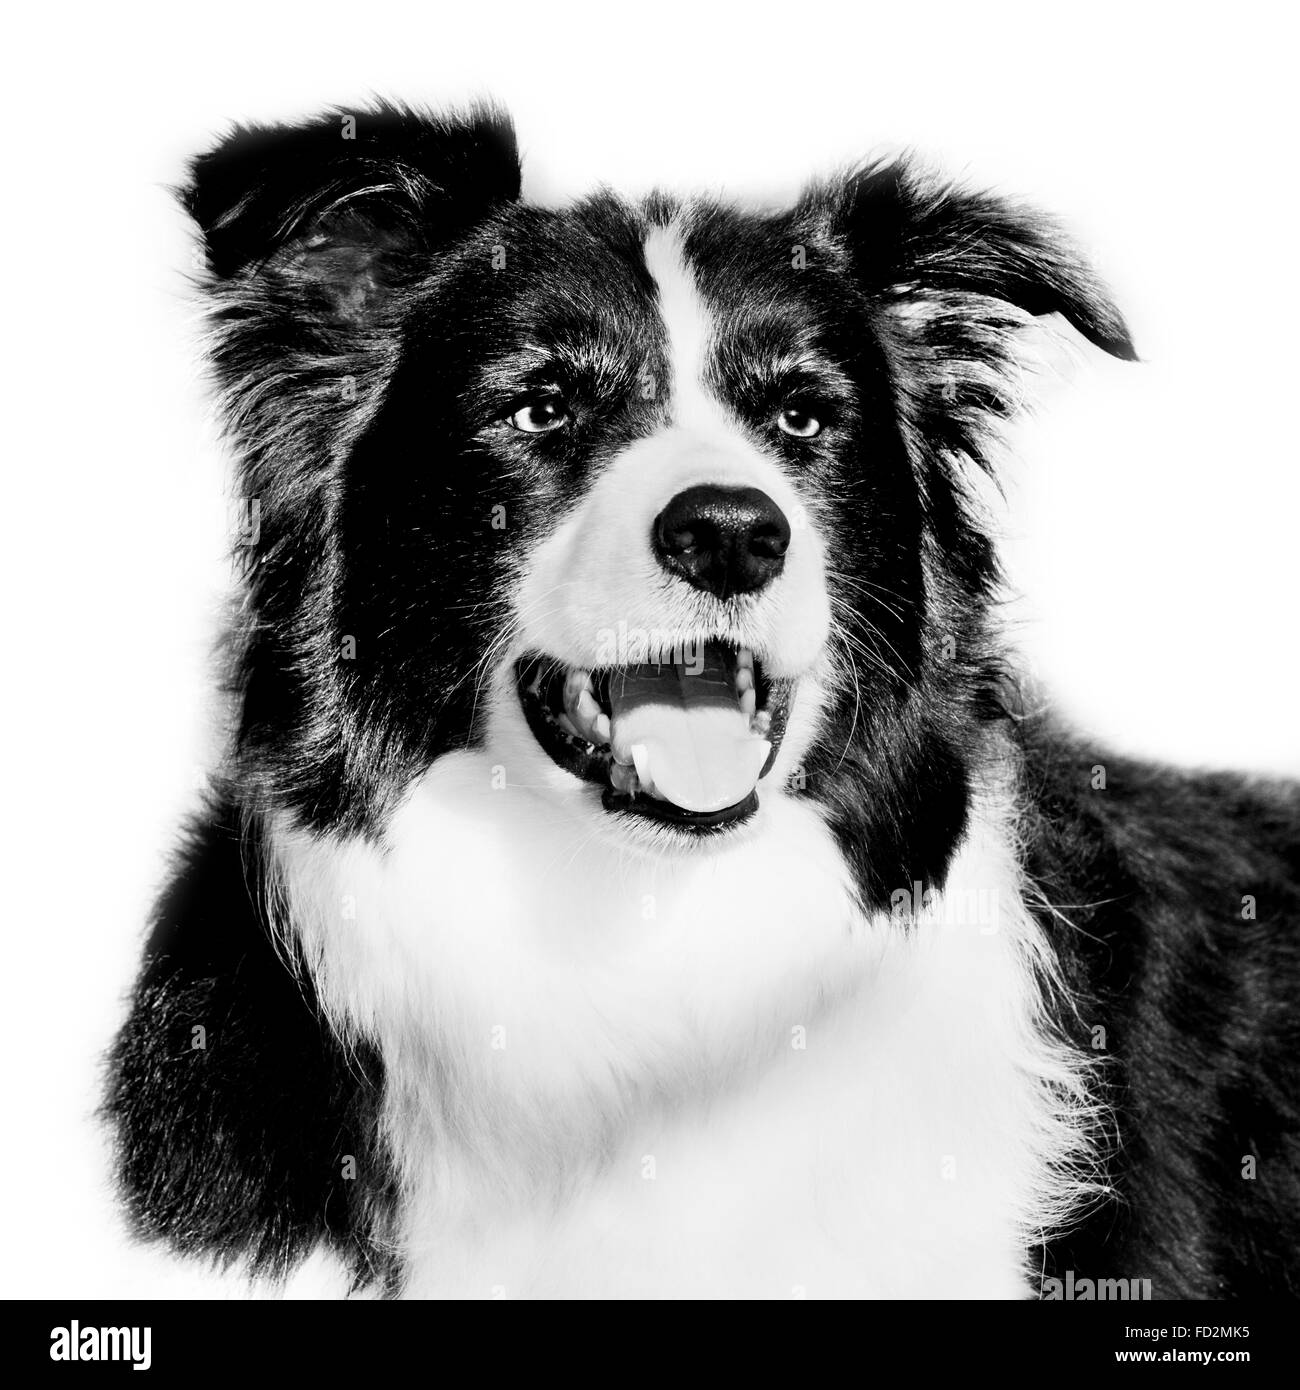 Border collie / Scottish sheep dog, black and white close up dog portrait Stock Photo